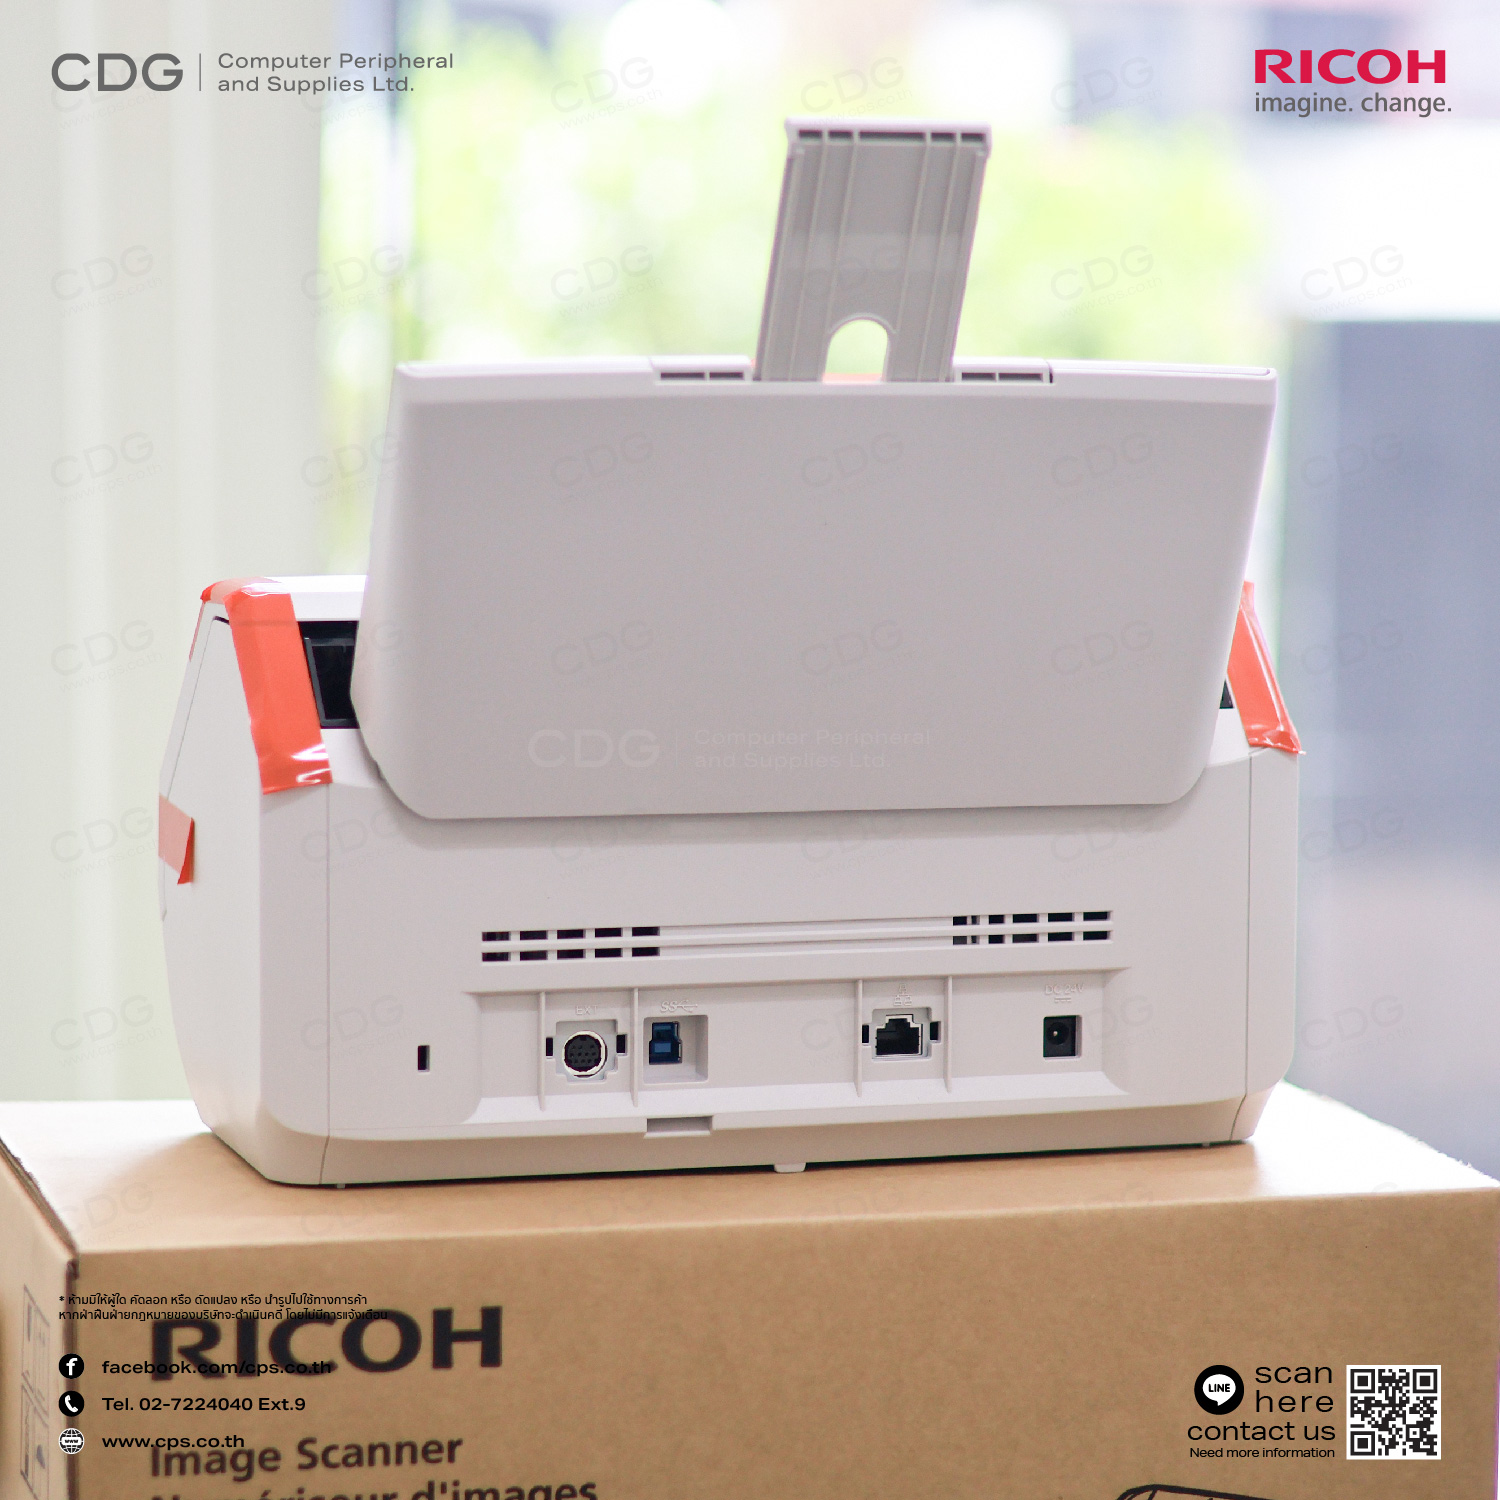 Ricoh Document Scanner fi-8170